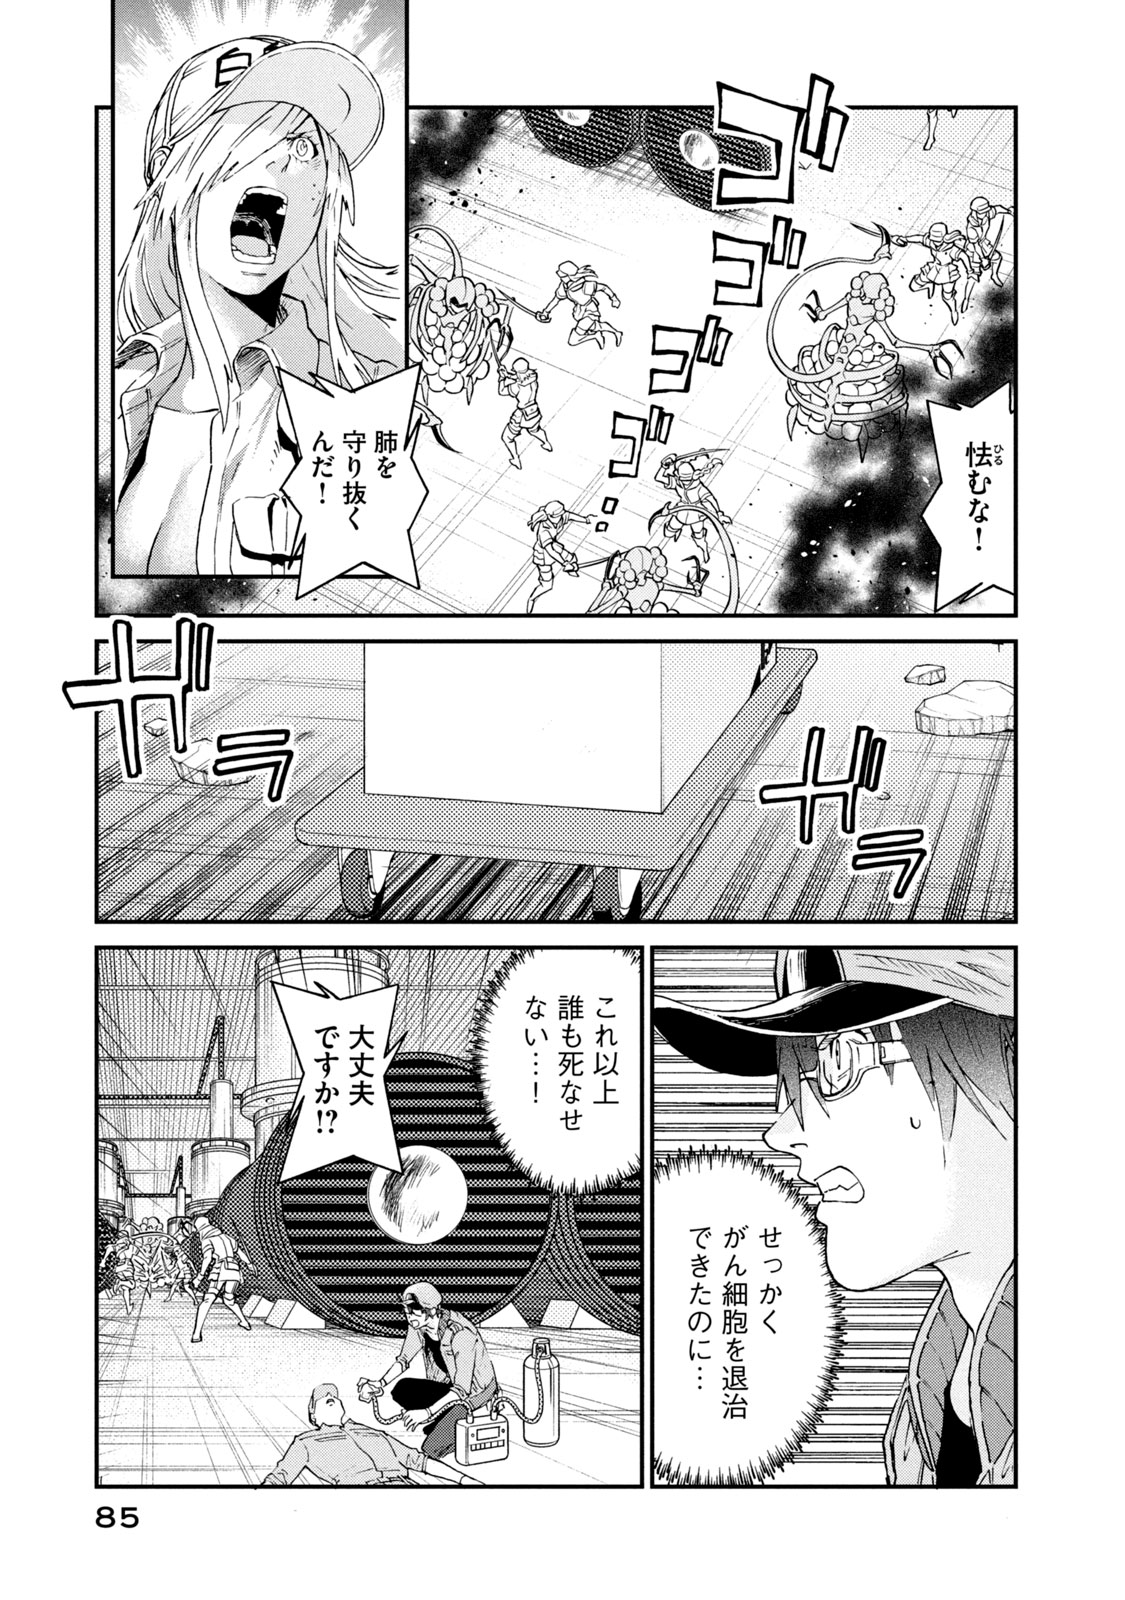 Hataraku Saibou BLACK - Chapter 39 - Page 23